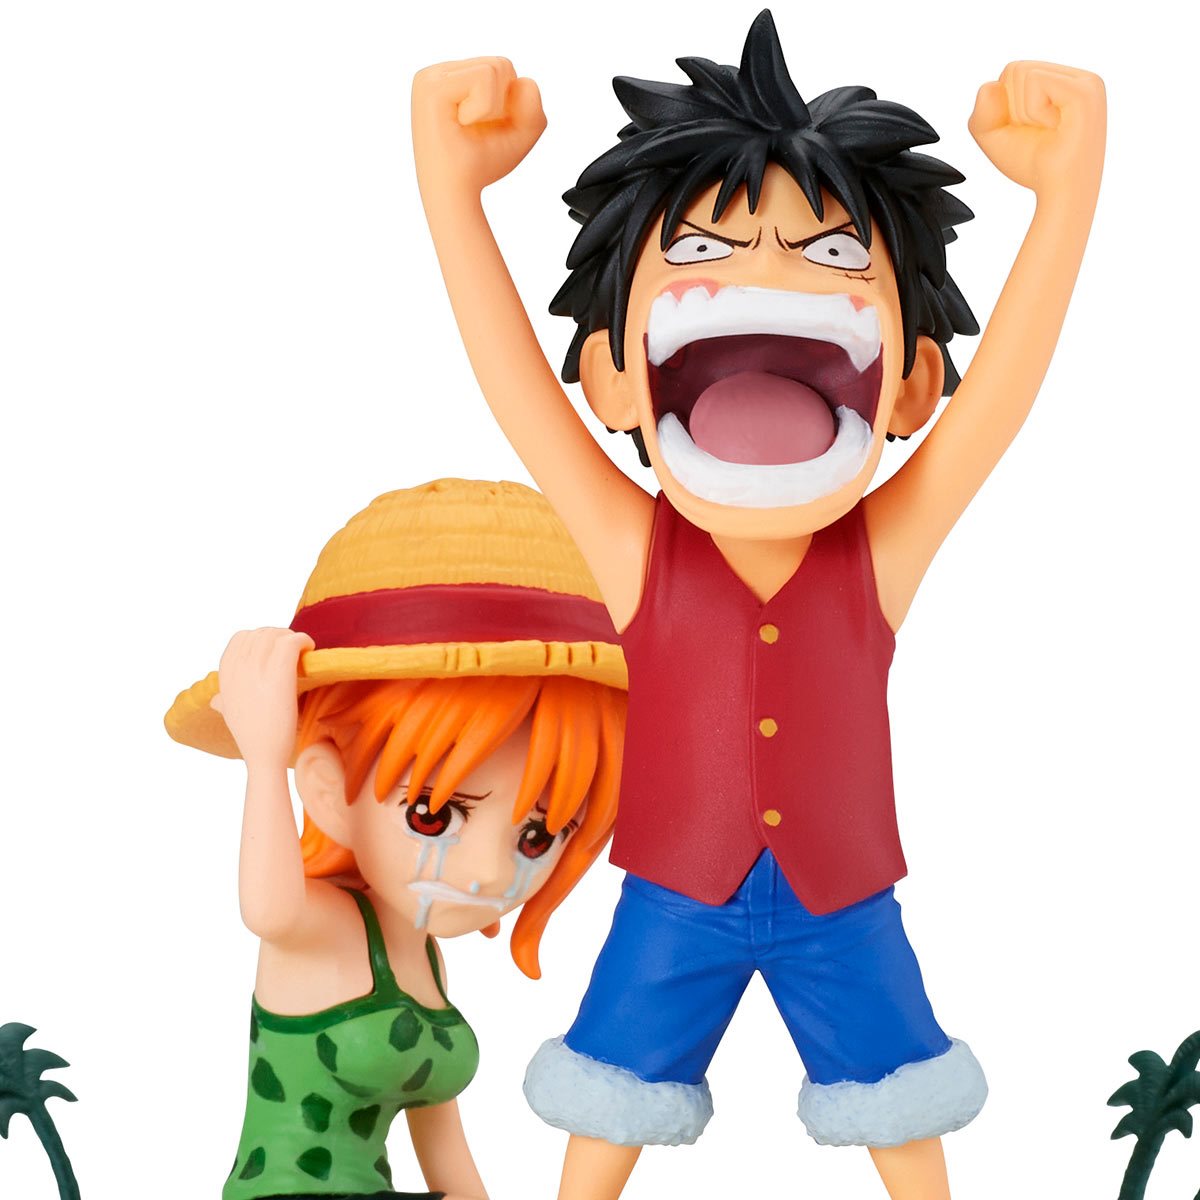 One Piece - Monkey D. Luffy, Nami Figure Banpresto (Log Stories) World Collectable